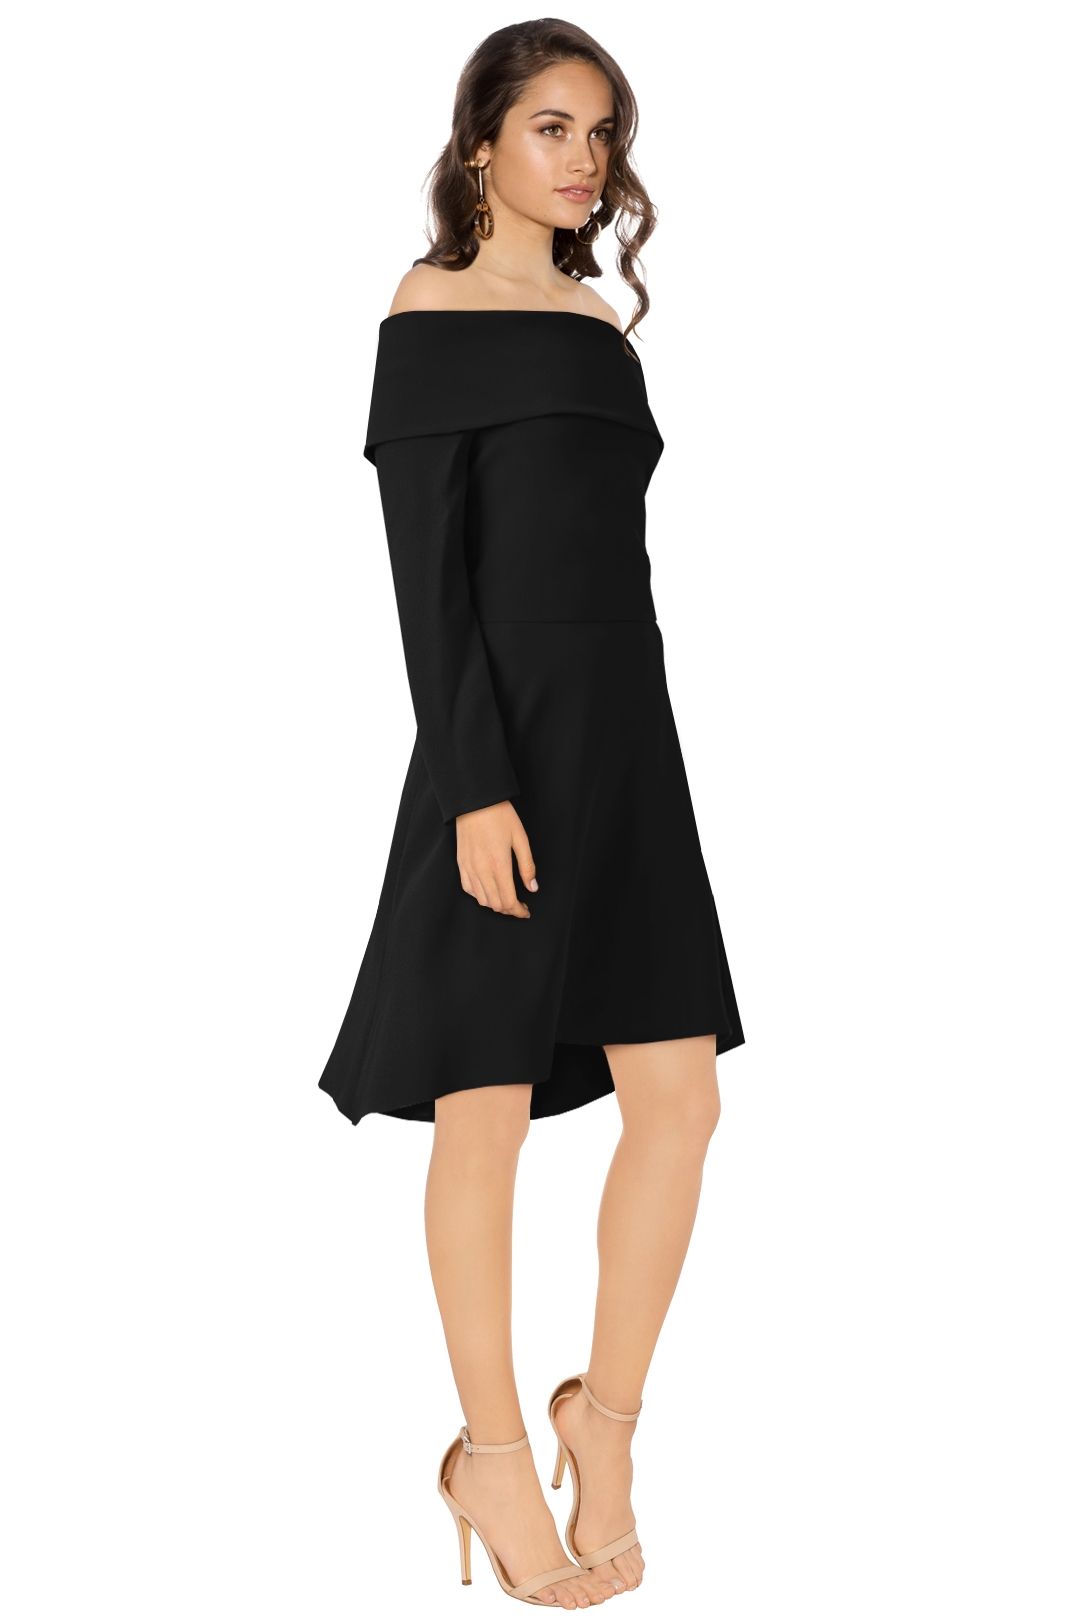 Theory - Elegant Mini Dress Black - Side